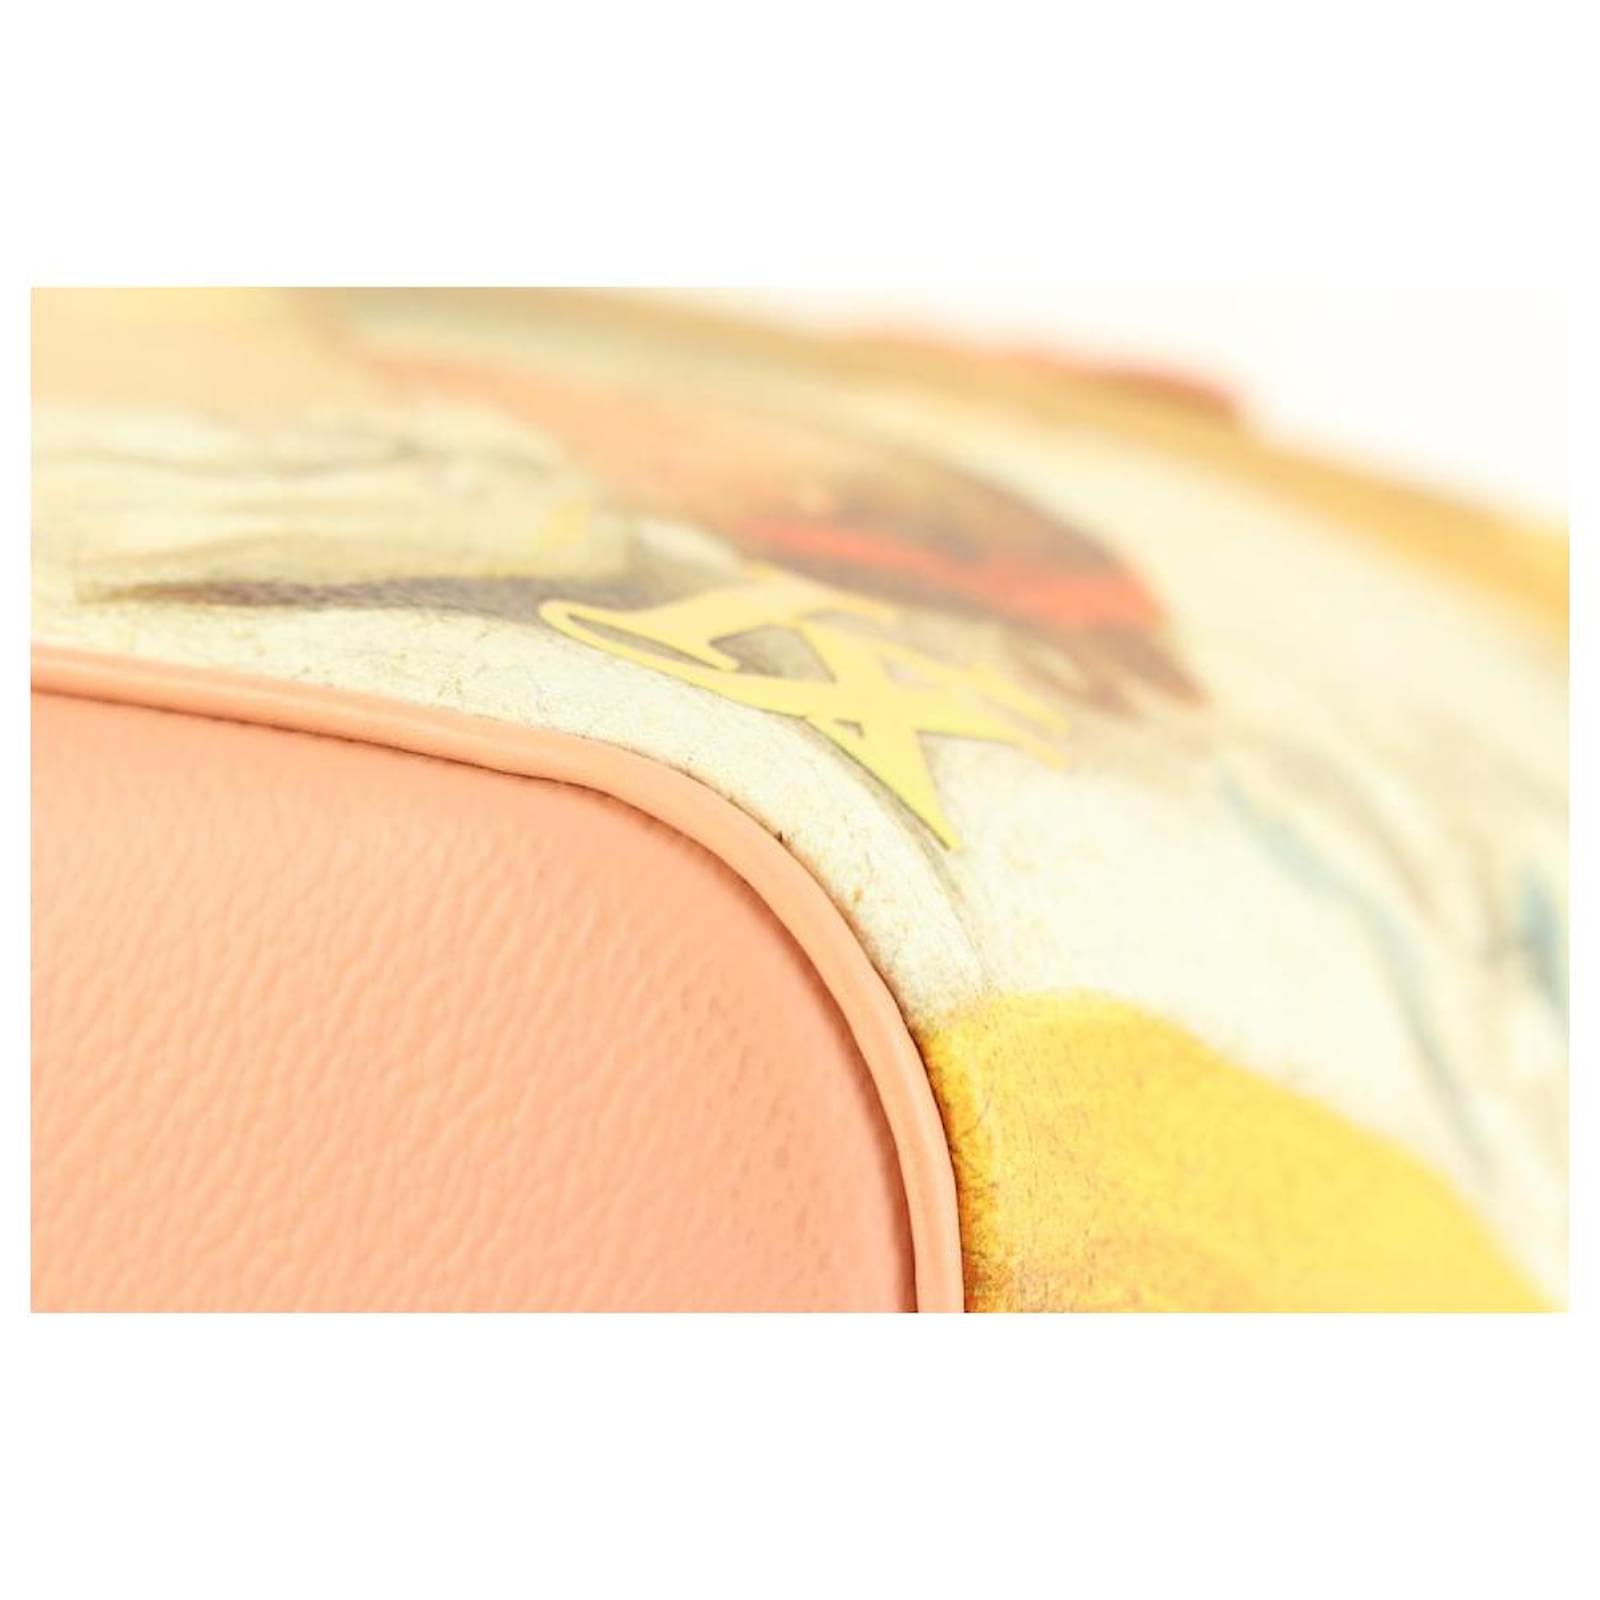 Louis Vuitton Masters Fragonard Neverfull MM Tote Pink - MyDesignerly